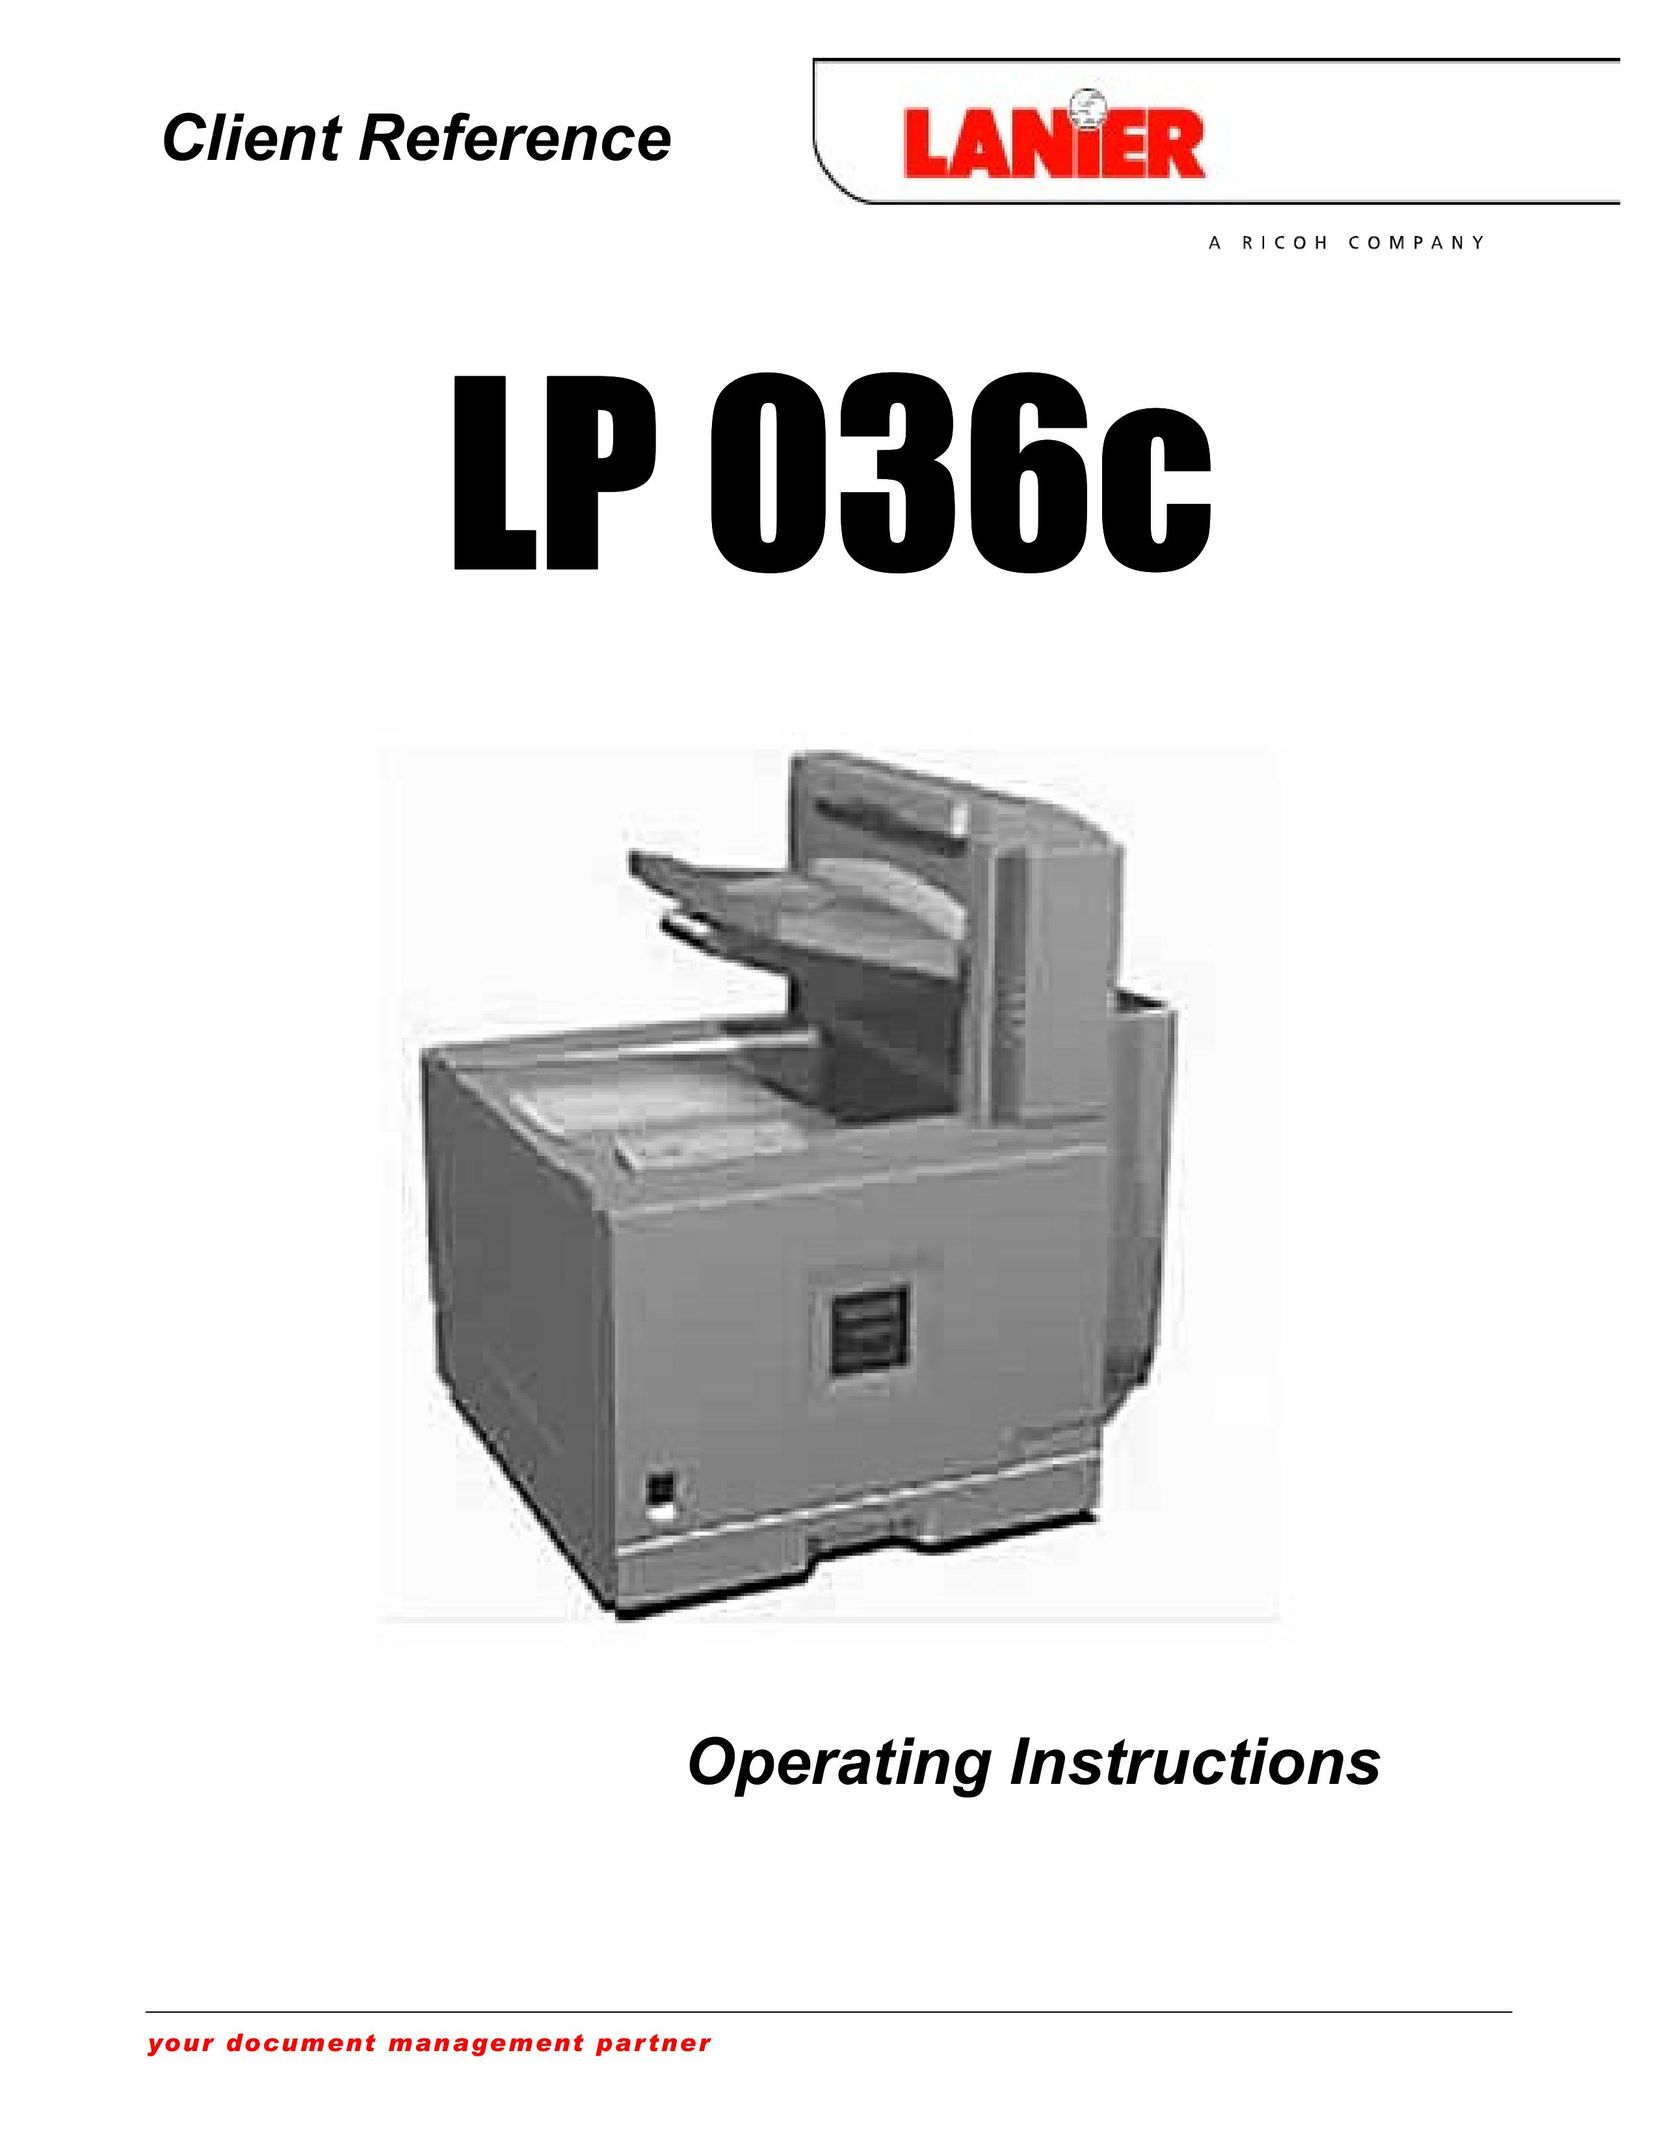 Lanier LP 036c Printer User Manual